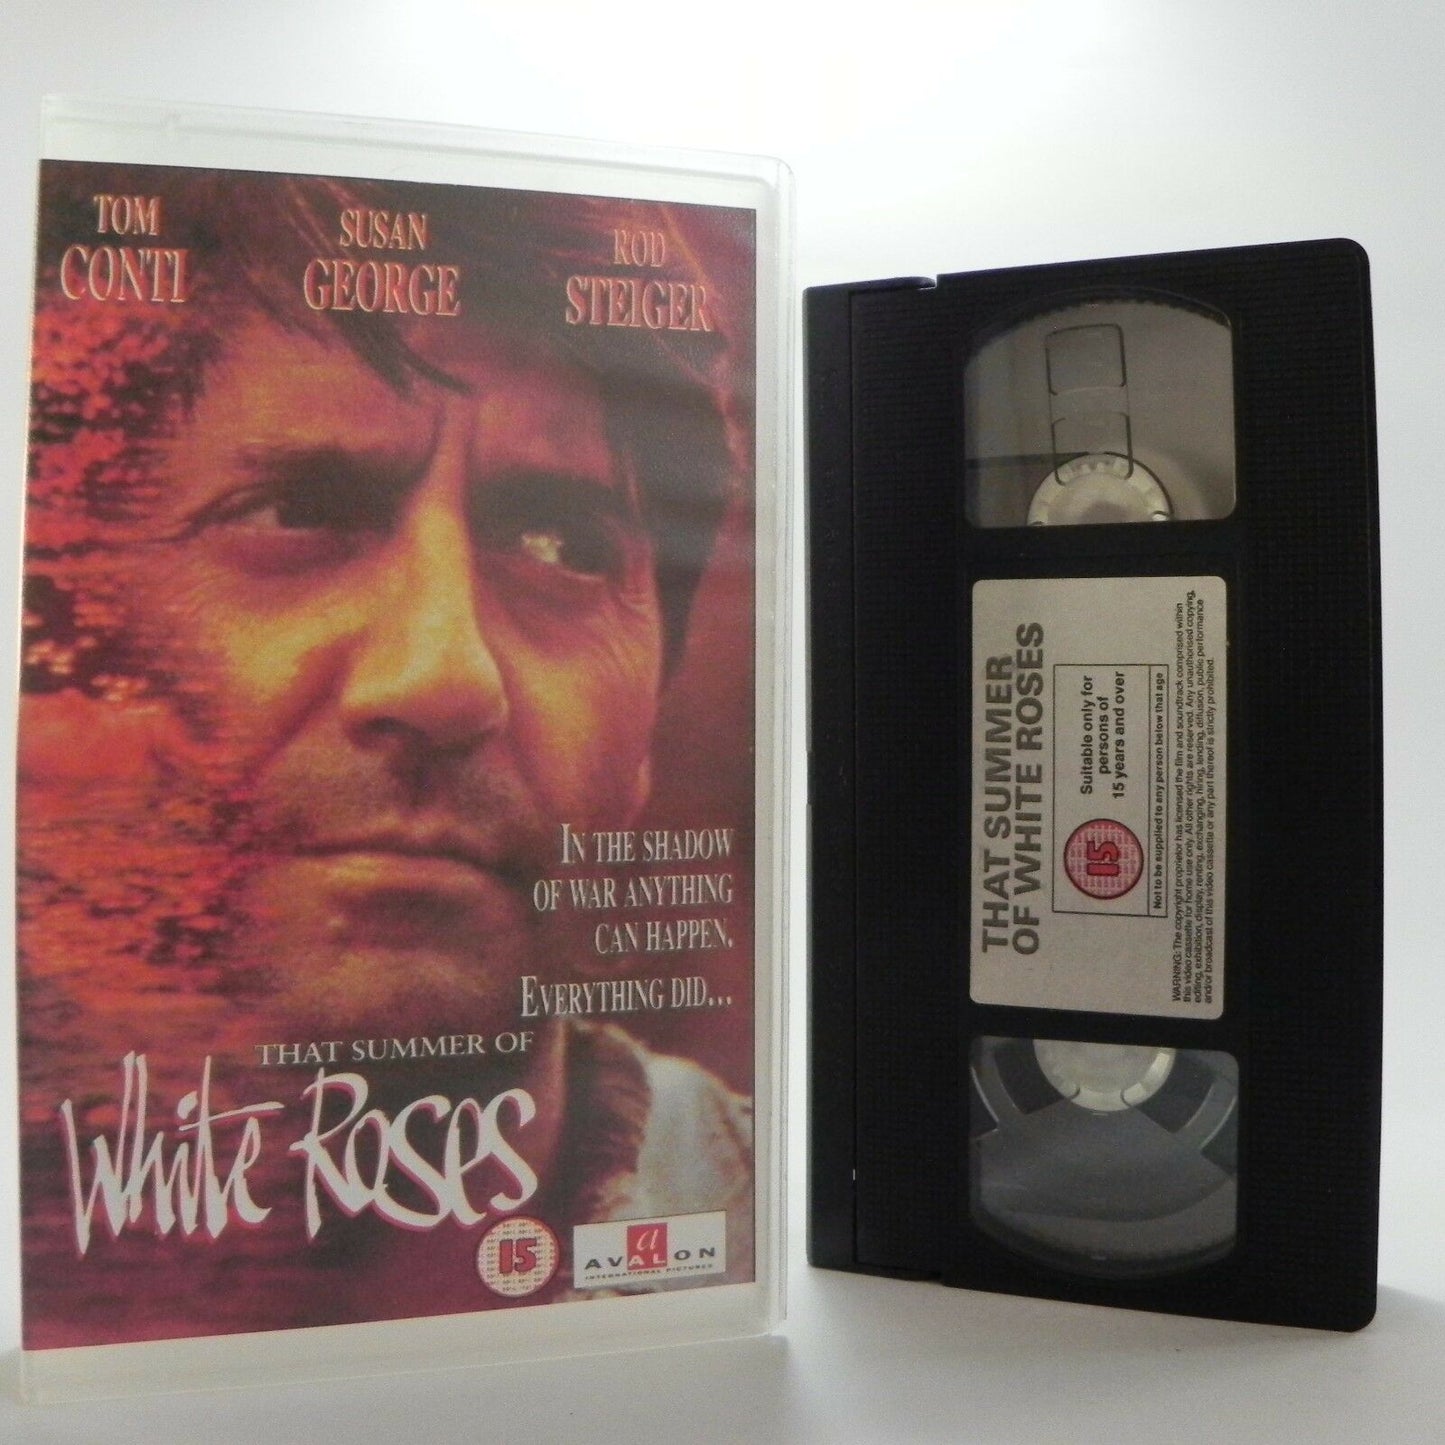 That Summer Of White Roses: War Drama - Tom Conti - Susan George - Pal VHS-